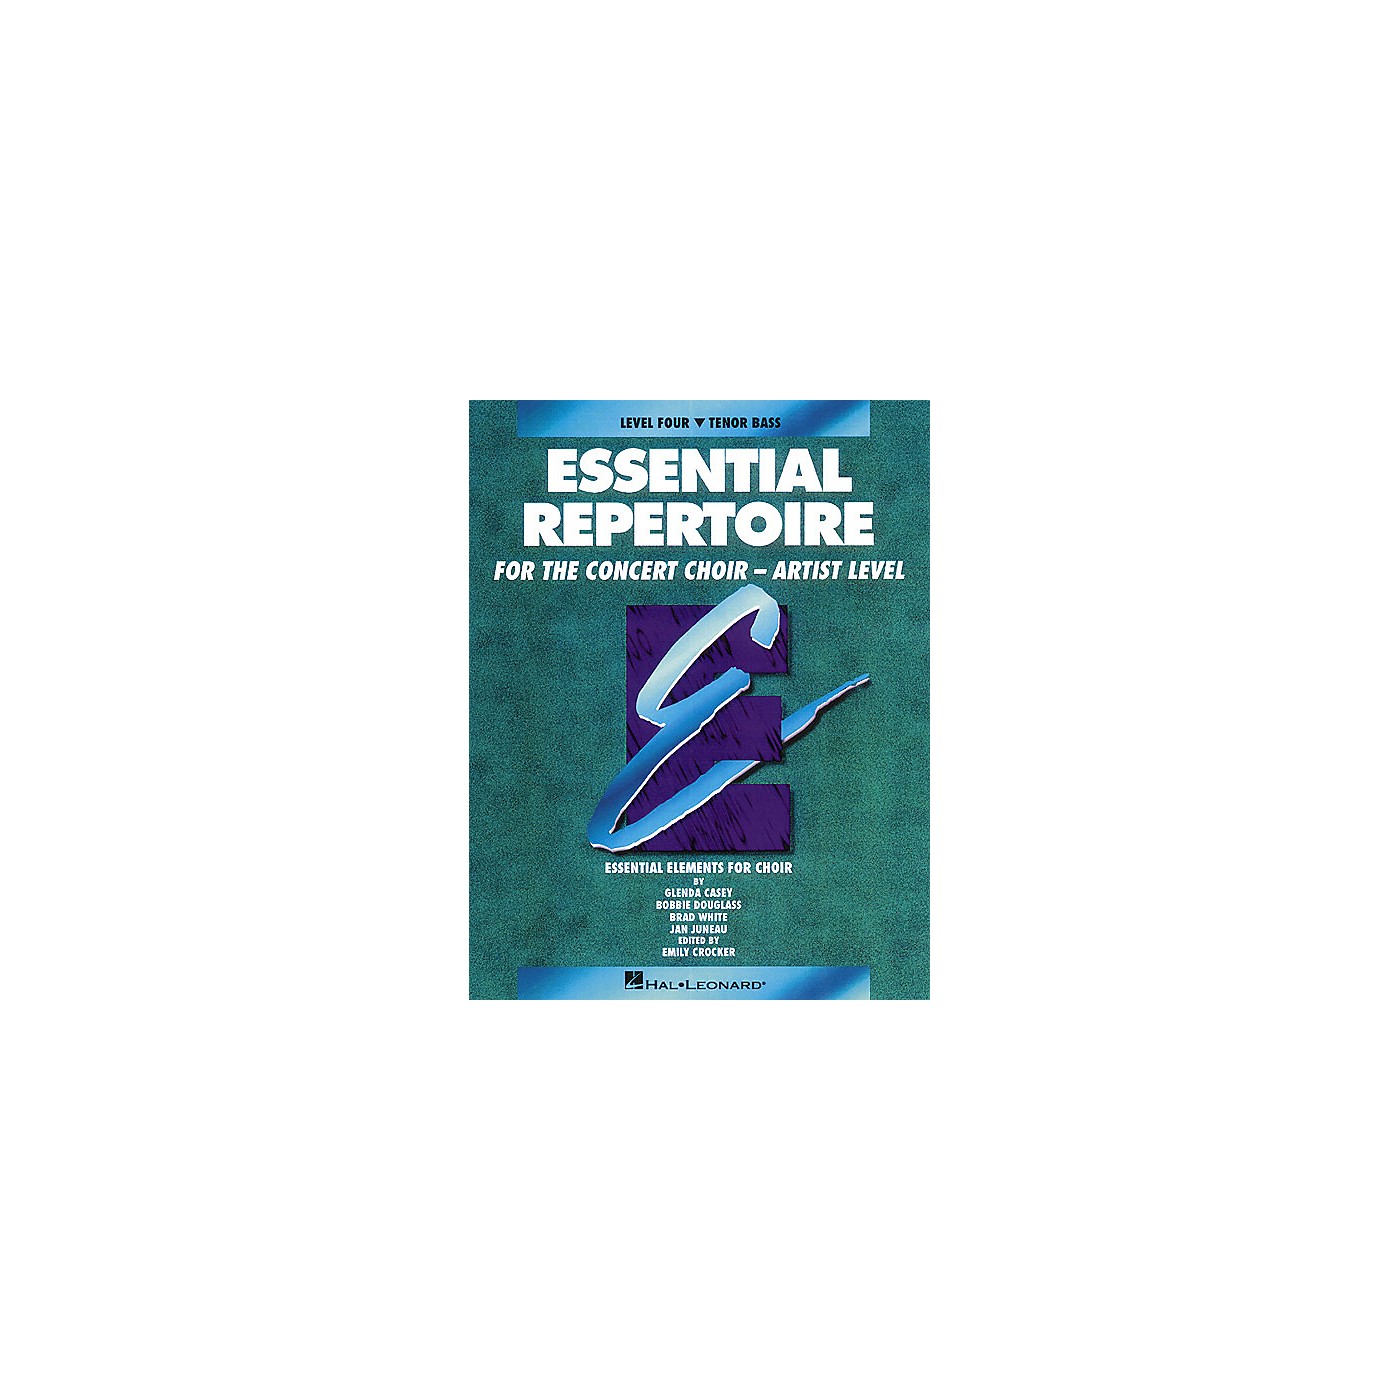 Hal Leonard Essential Repertoire for the Concert Choir - Artist Level Tenor Bass Part-Learning CDs 3 by Glenda Casey thumbnail